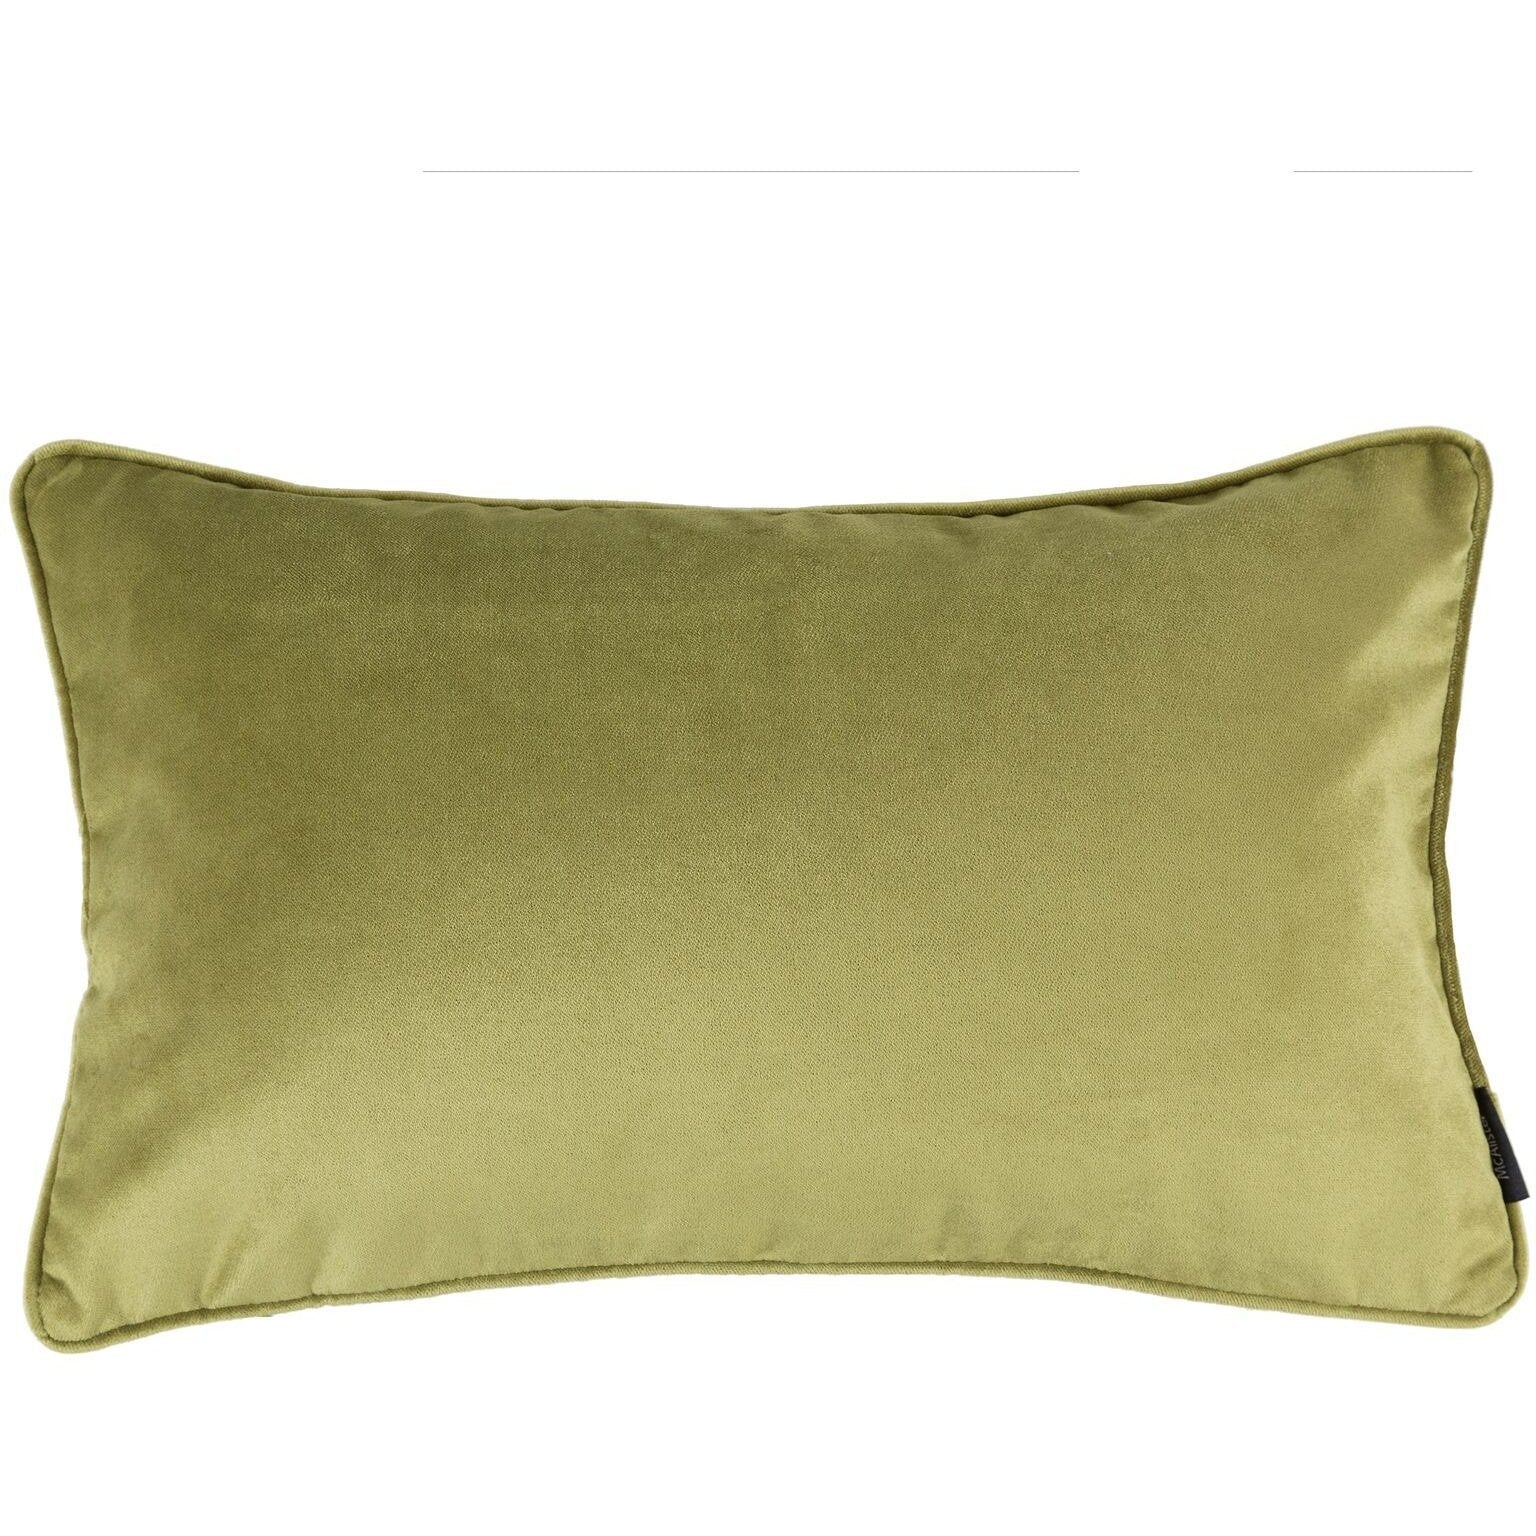 McAlister Textiles Matt Lime Green Velvet Pillow Pillow Cover Only 50cm x 30cm 